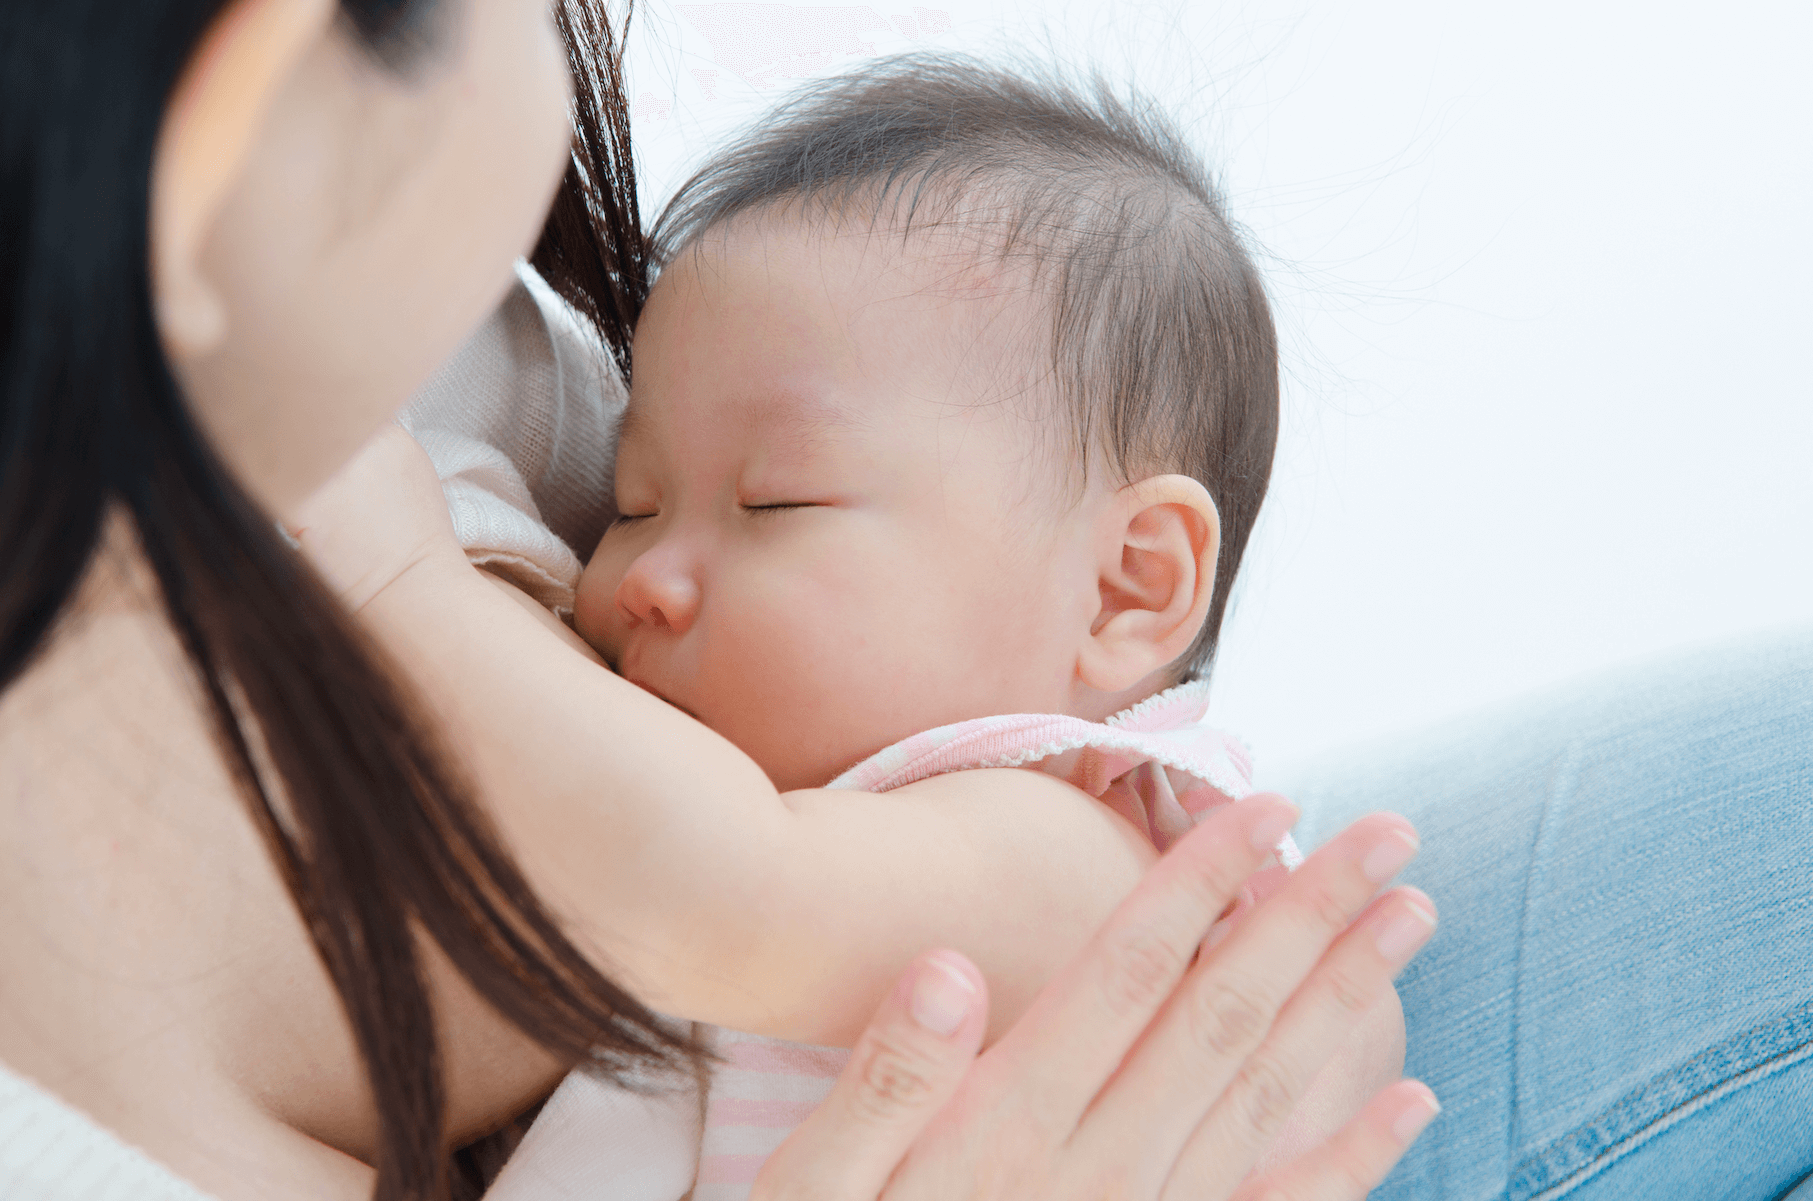 Informative Website for Breastfeeding Moms